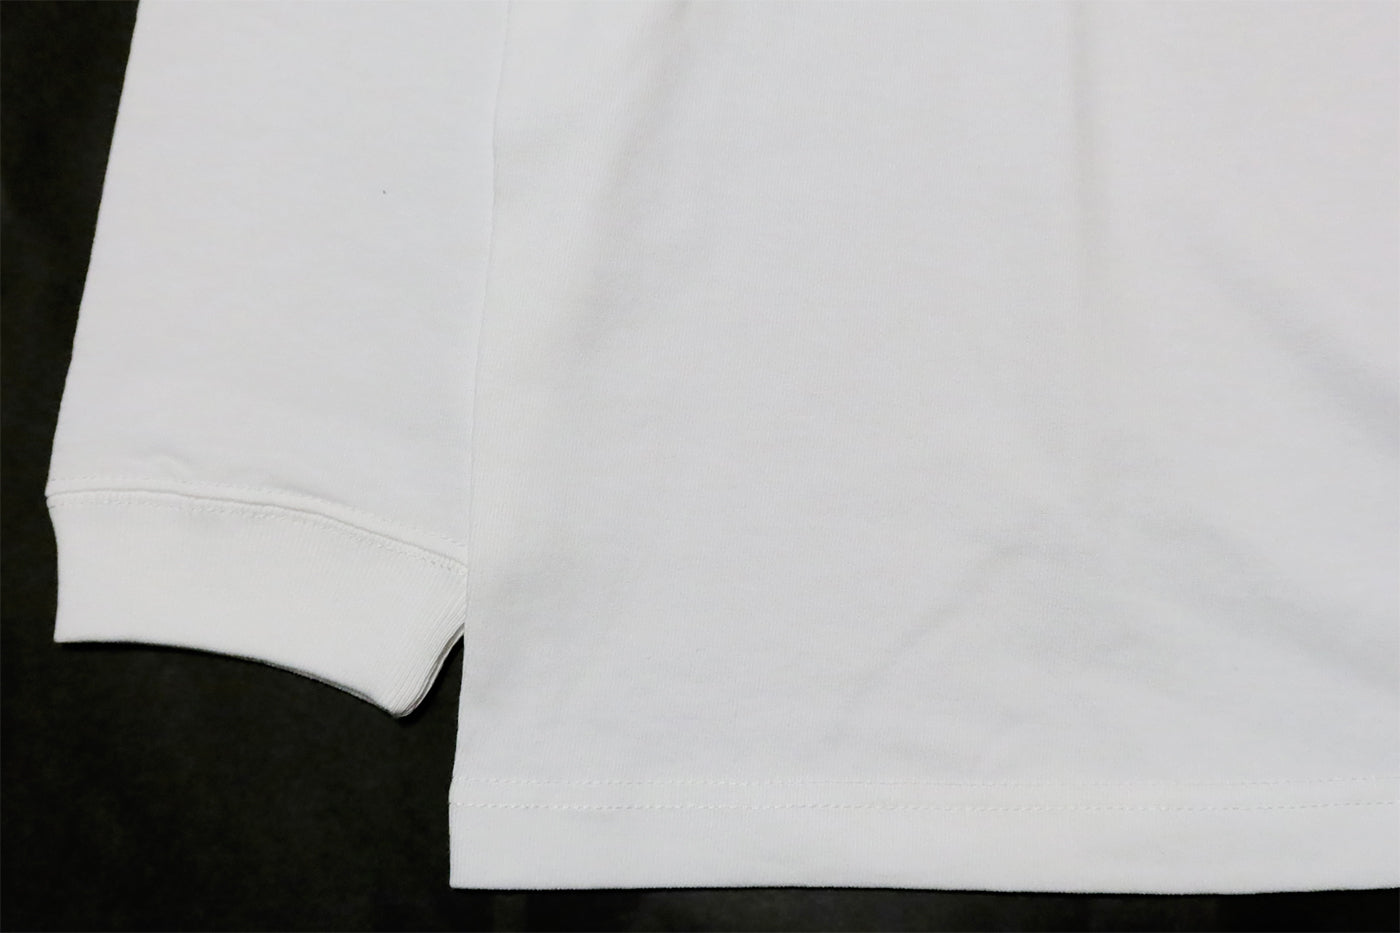 HEAD LOCK Original Long T-shirt Headlock Logo HLLT-010 Men's Long Sleeve White